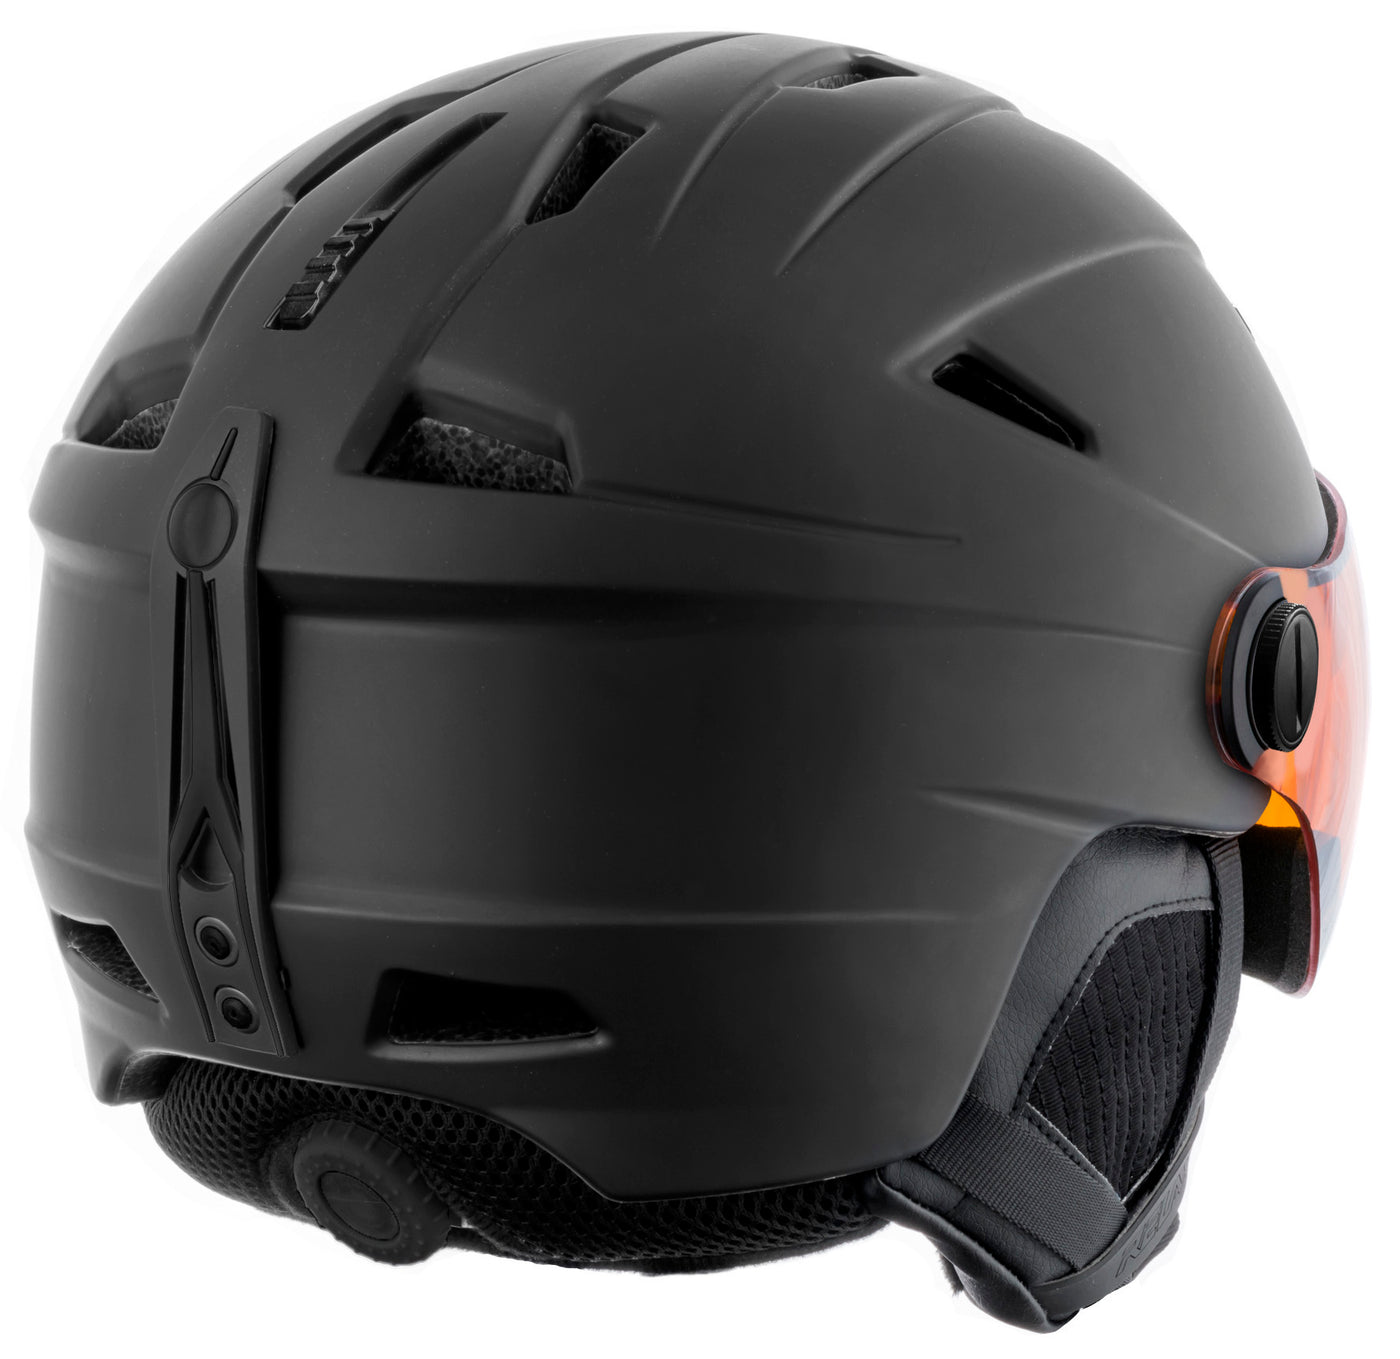 Ski Helmet Relax Stealth RH24A1 - Black